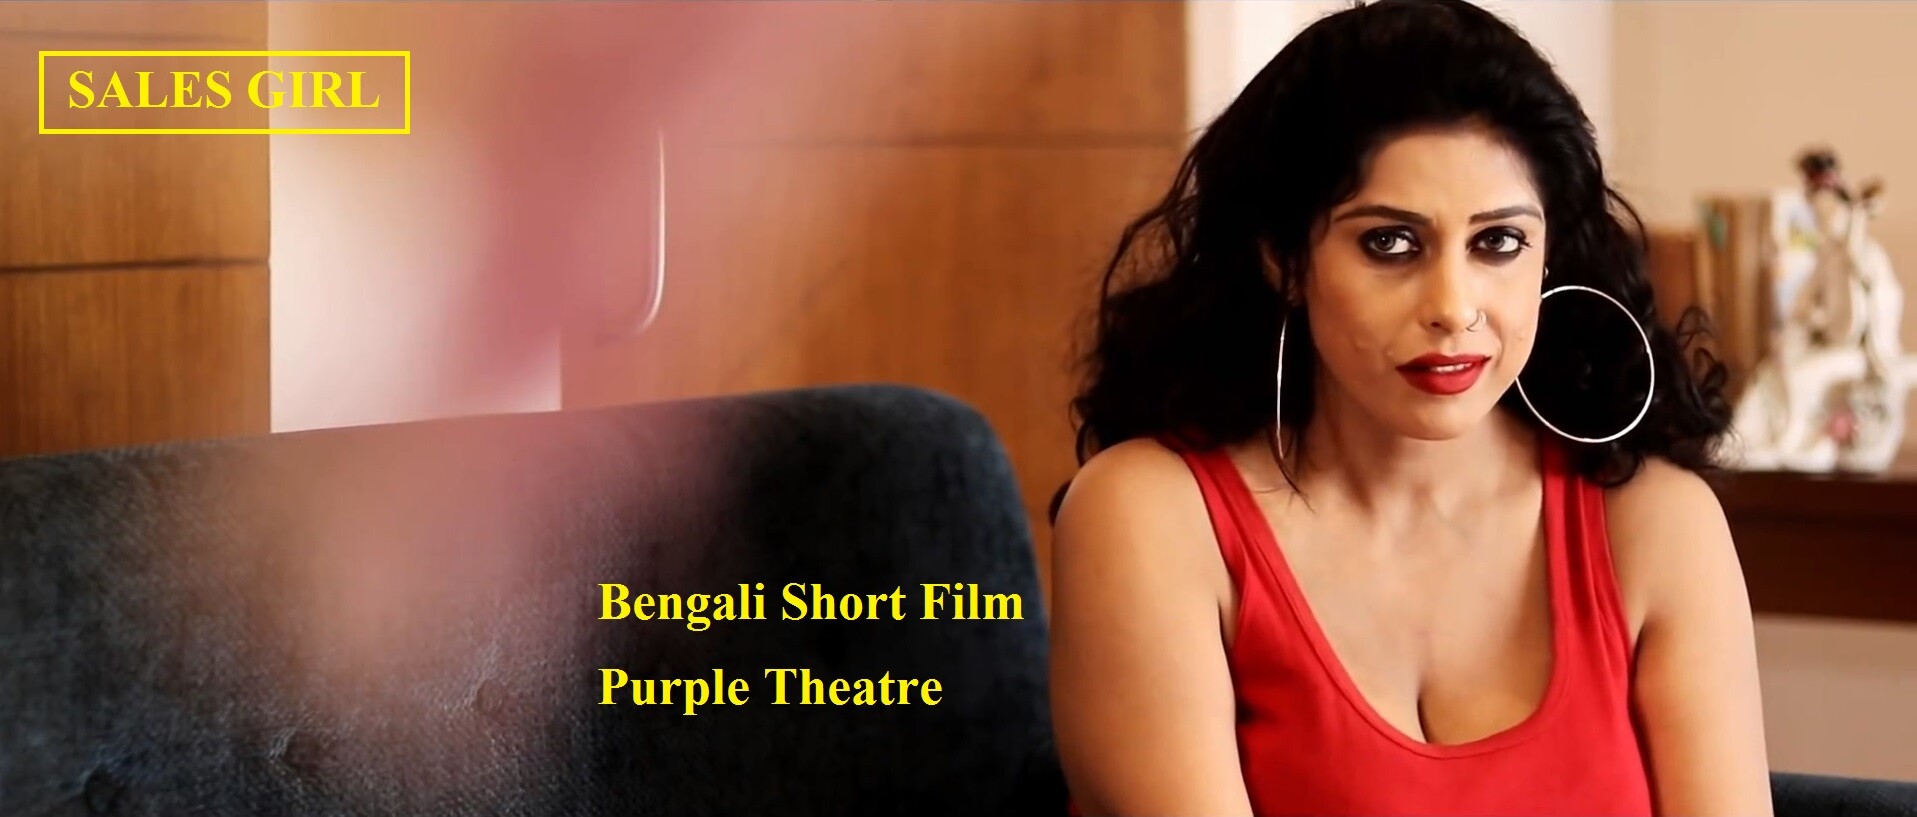 Sales Girl Purple Theatre Indian Bengali Bold 18+ Short Film